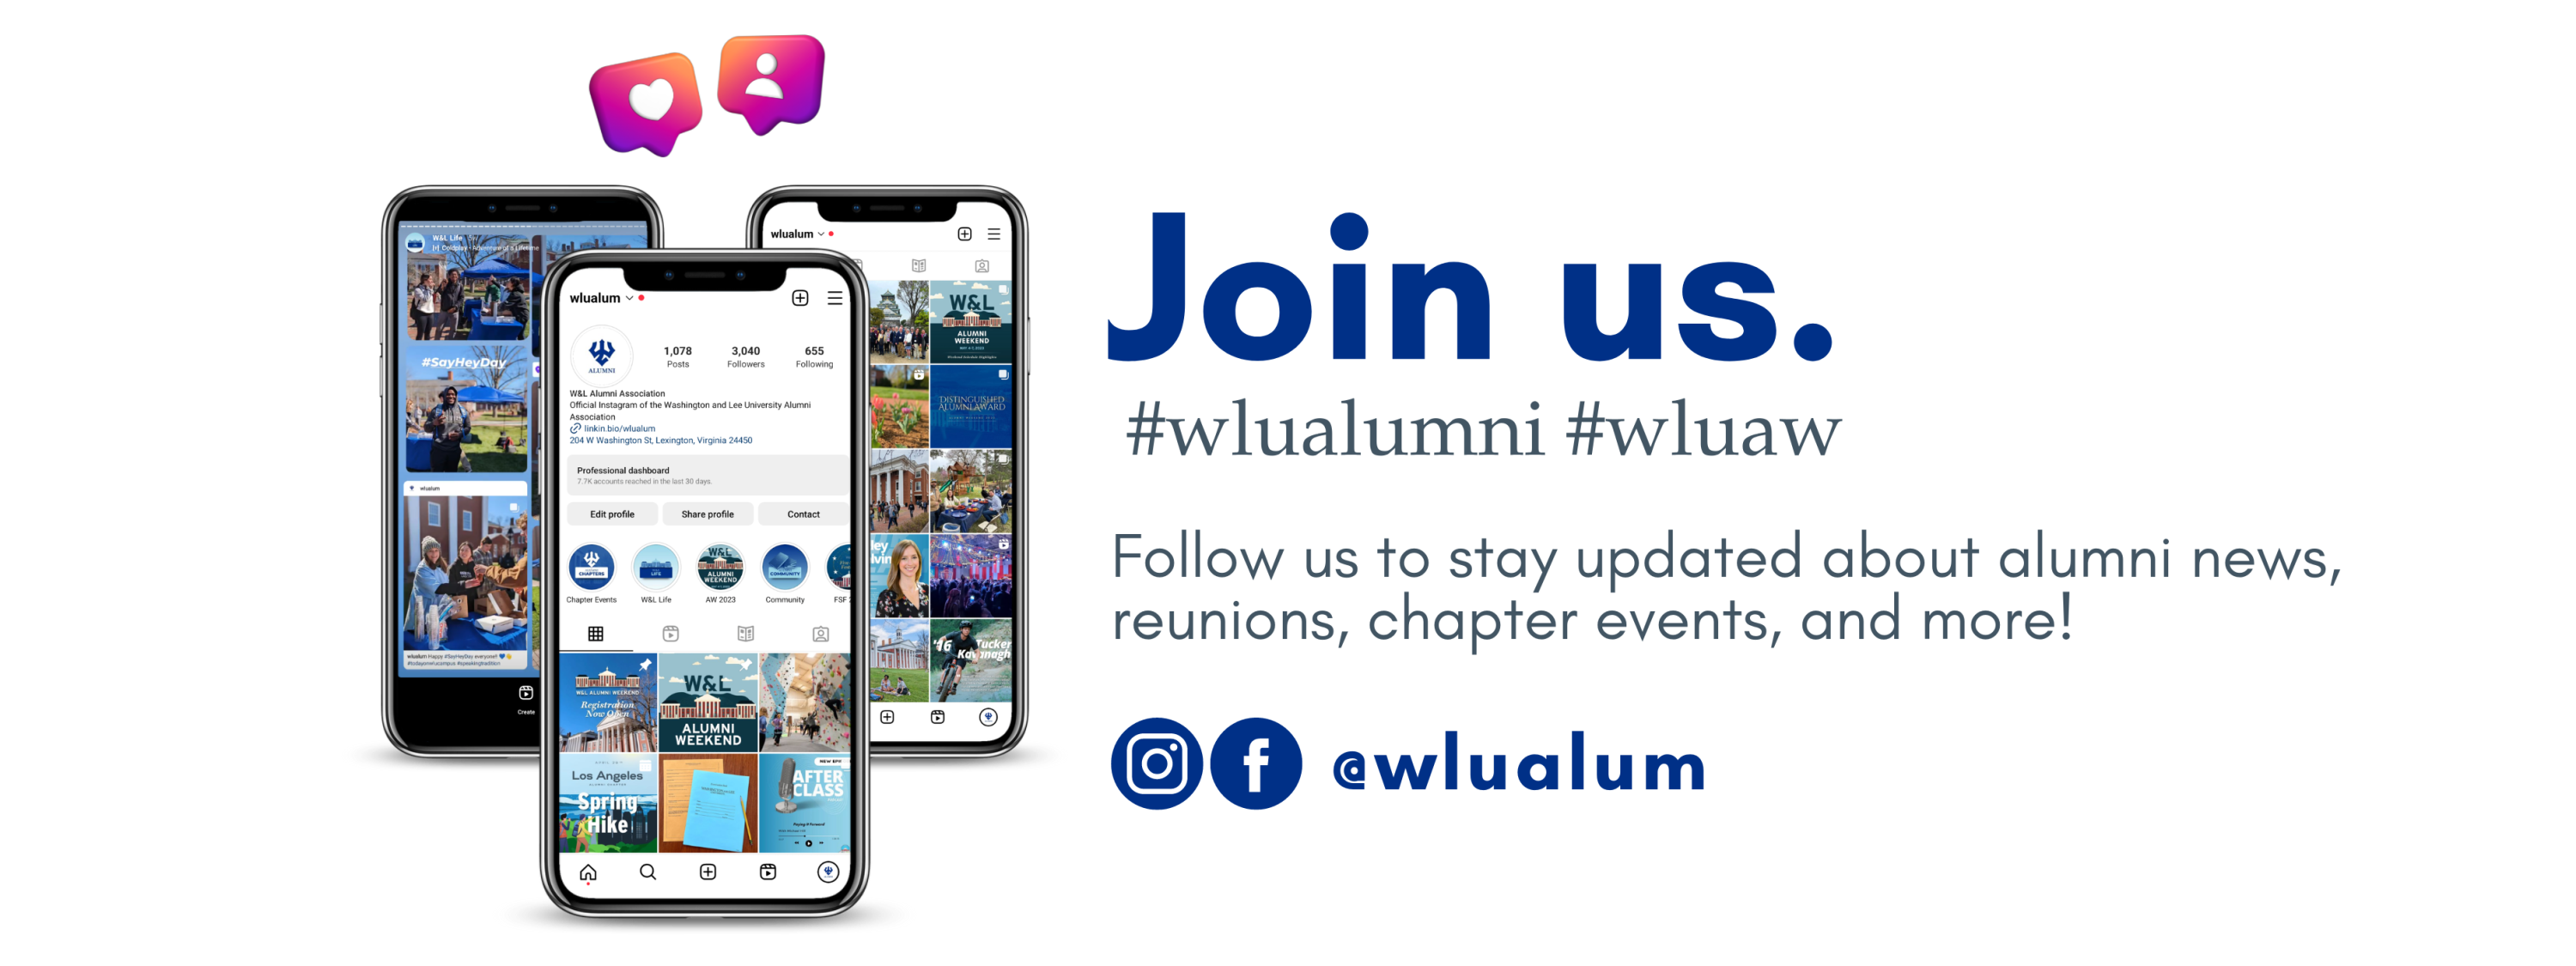 Image promoting @wlualum social media handles